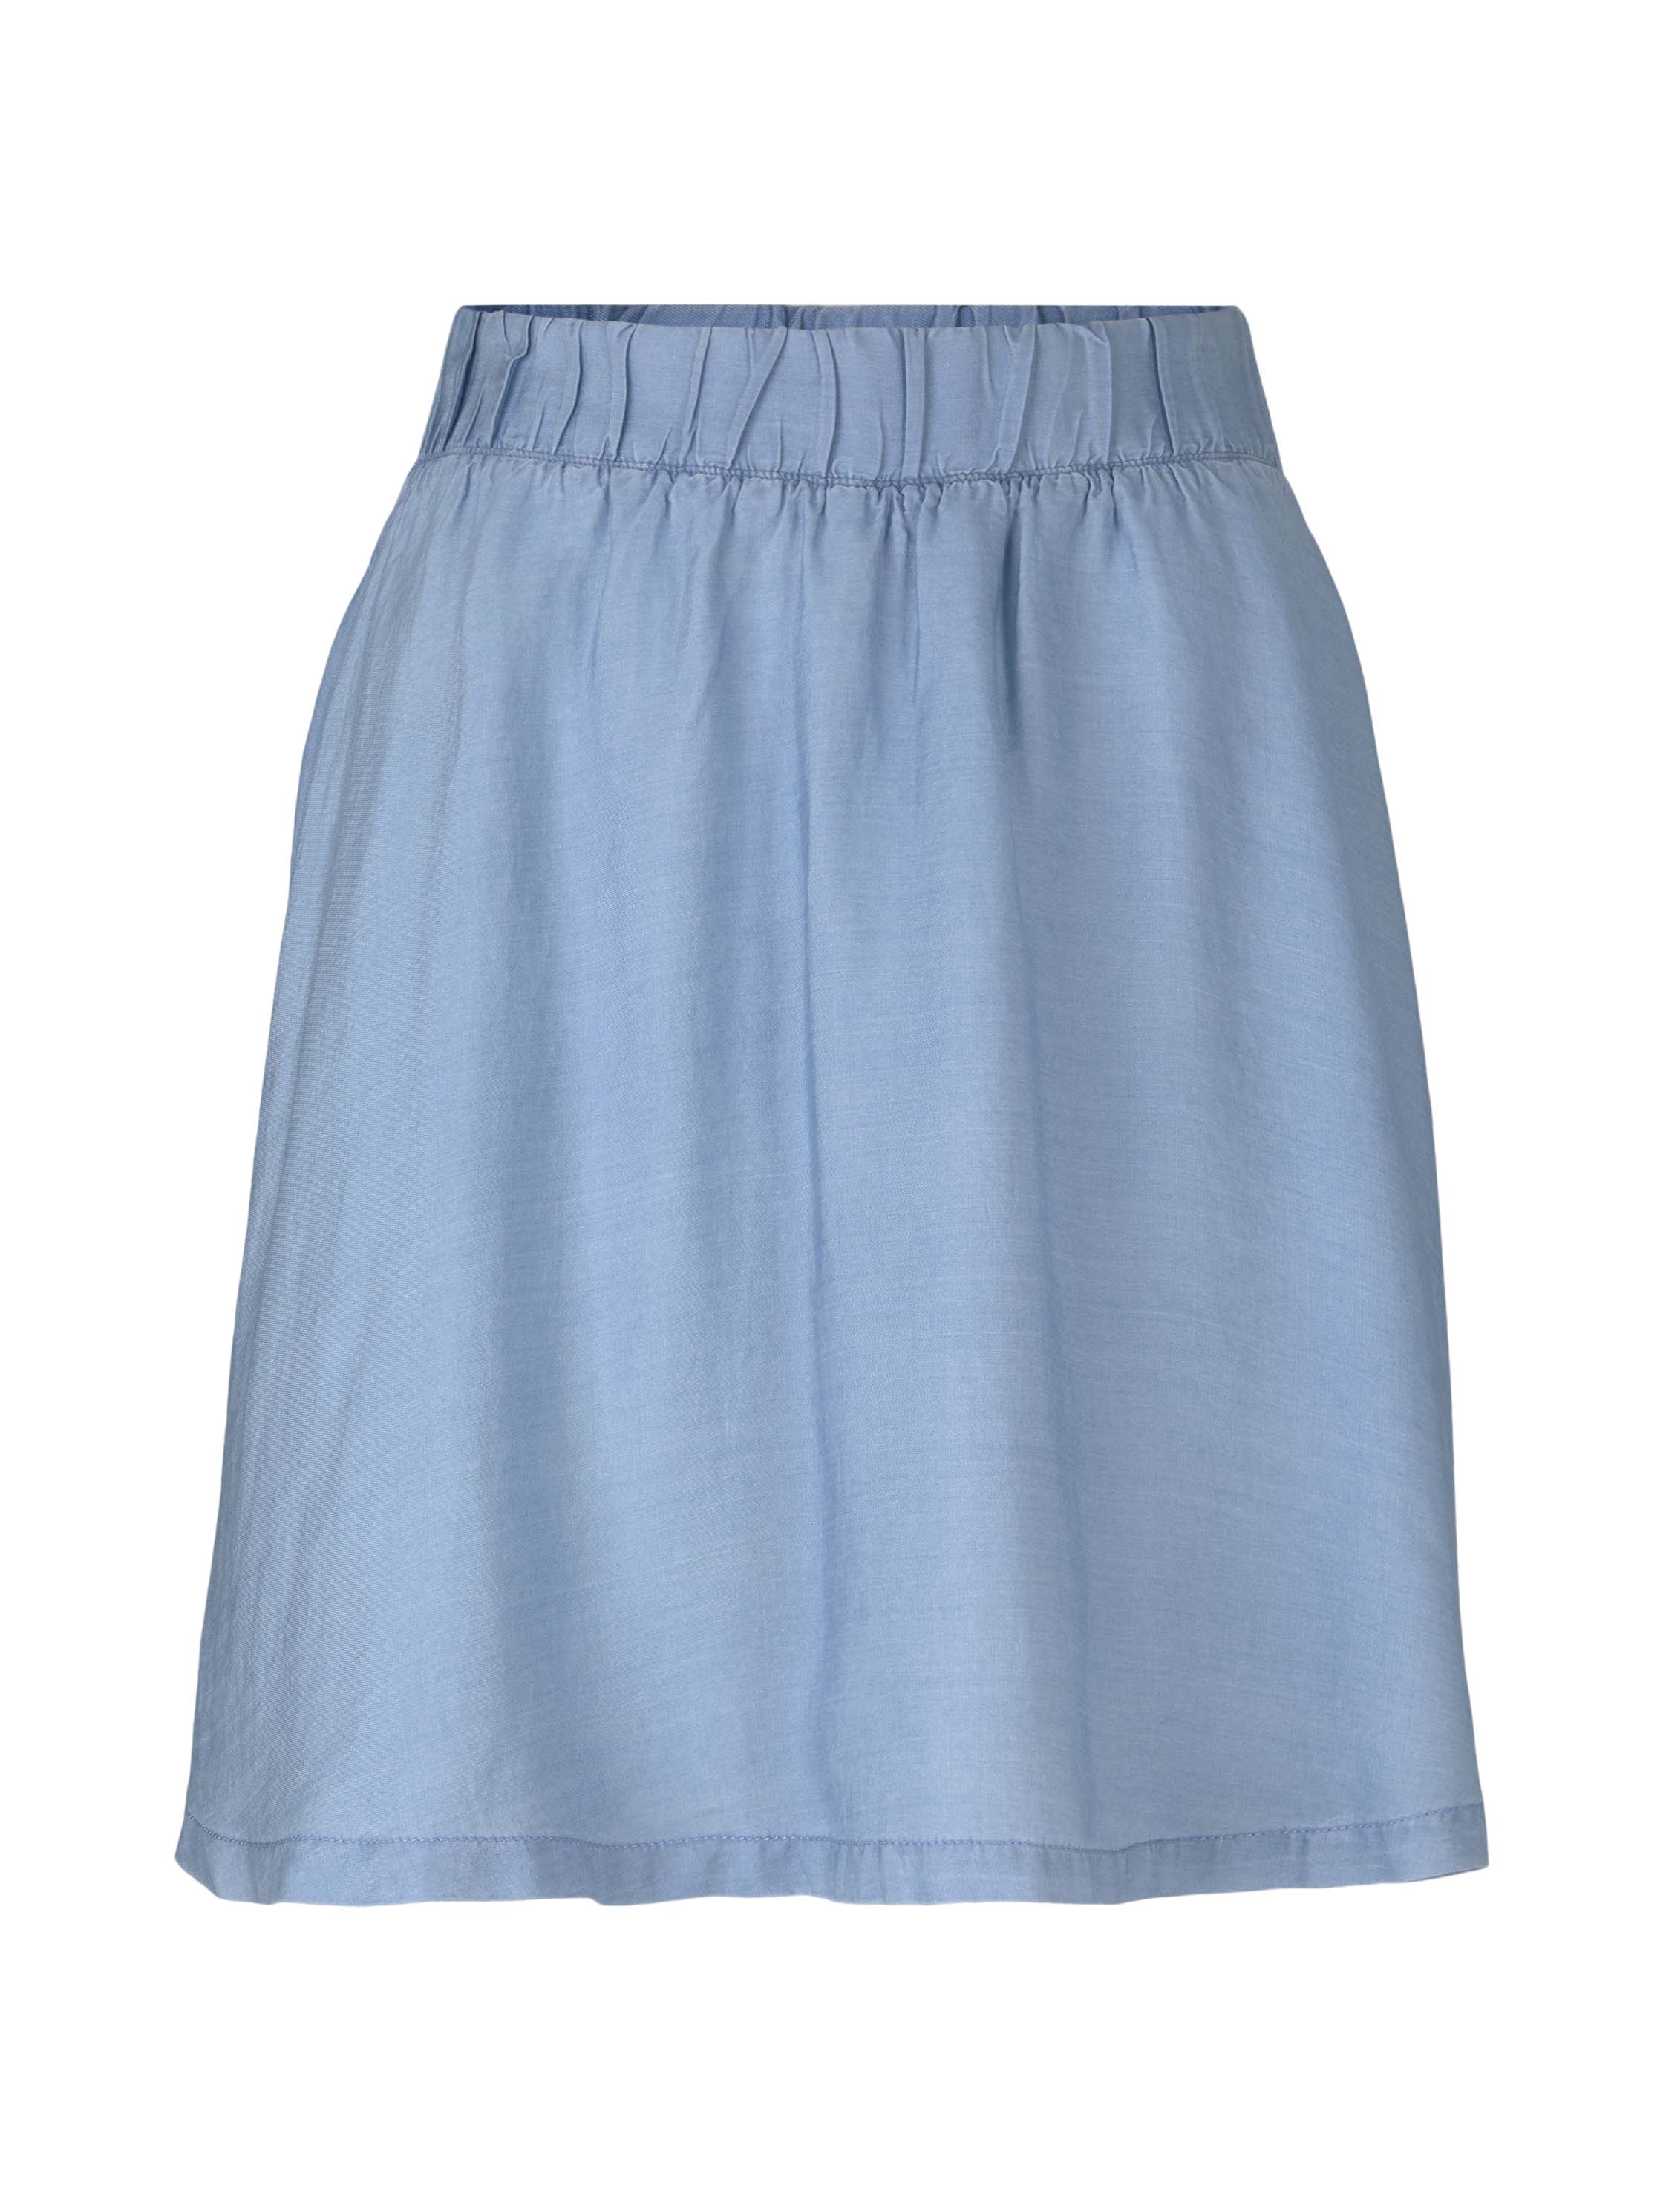 flared chambray skirt, light stone bright blue denim